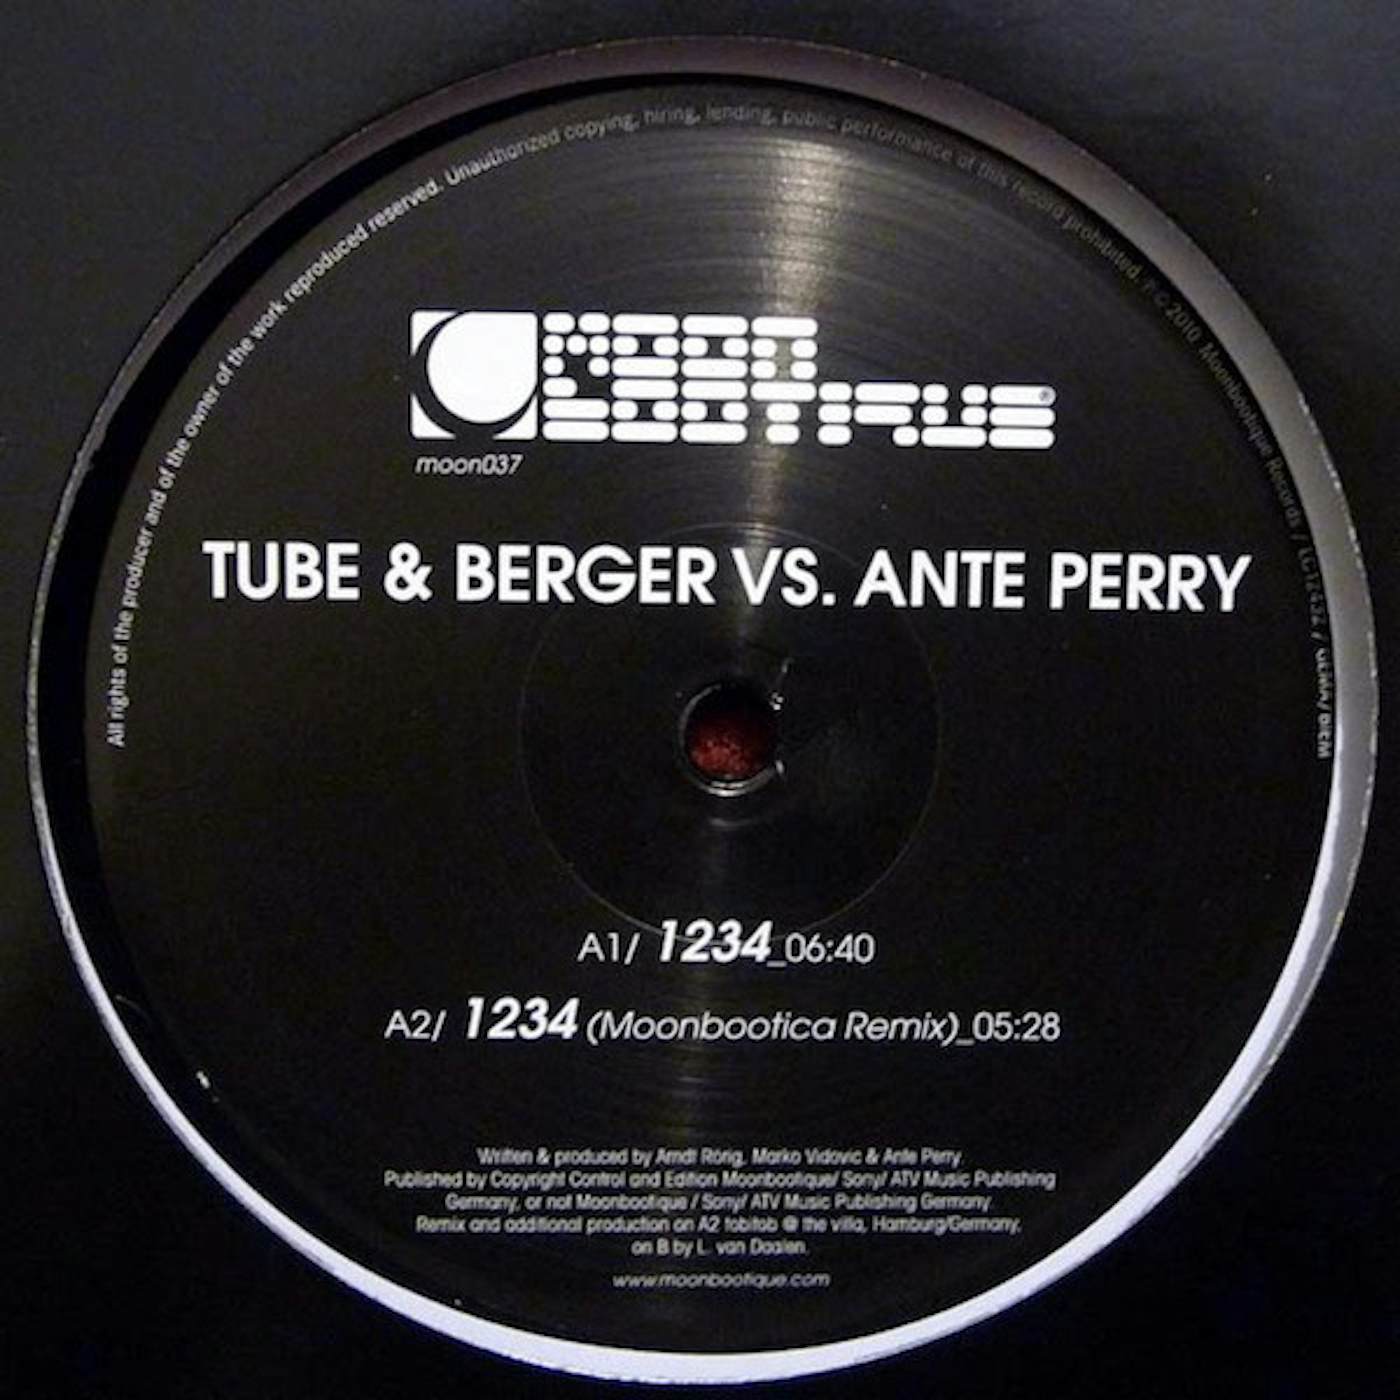 Tube & Berger & Ante Perry 1234 Vinyl Record